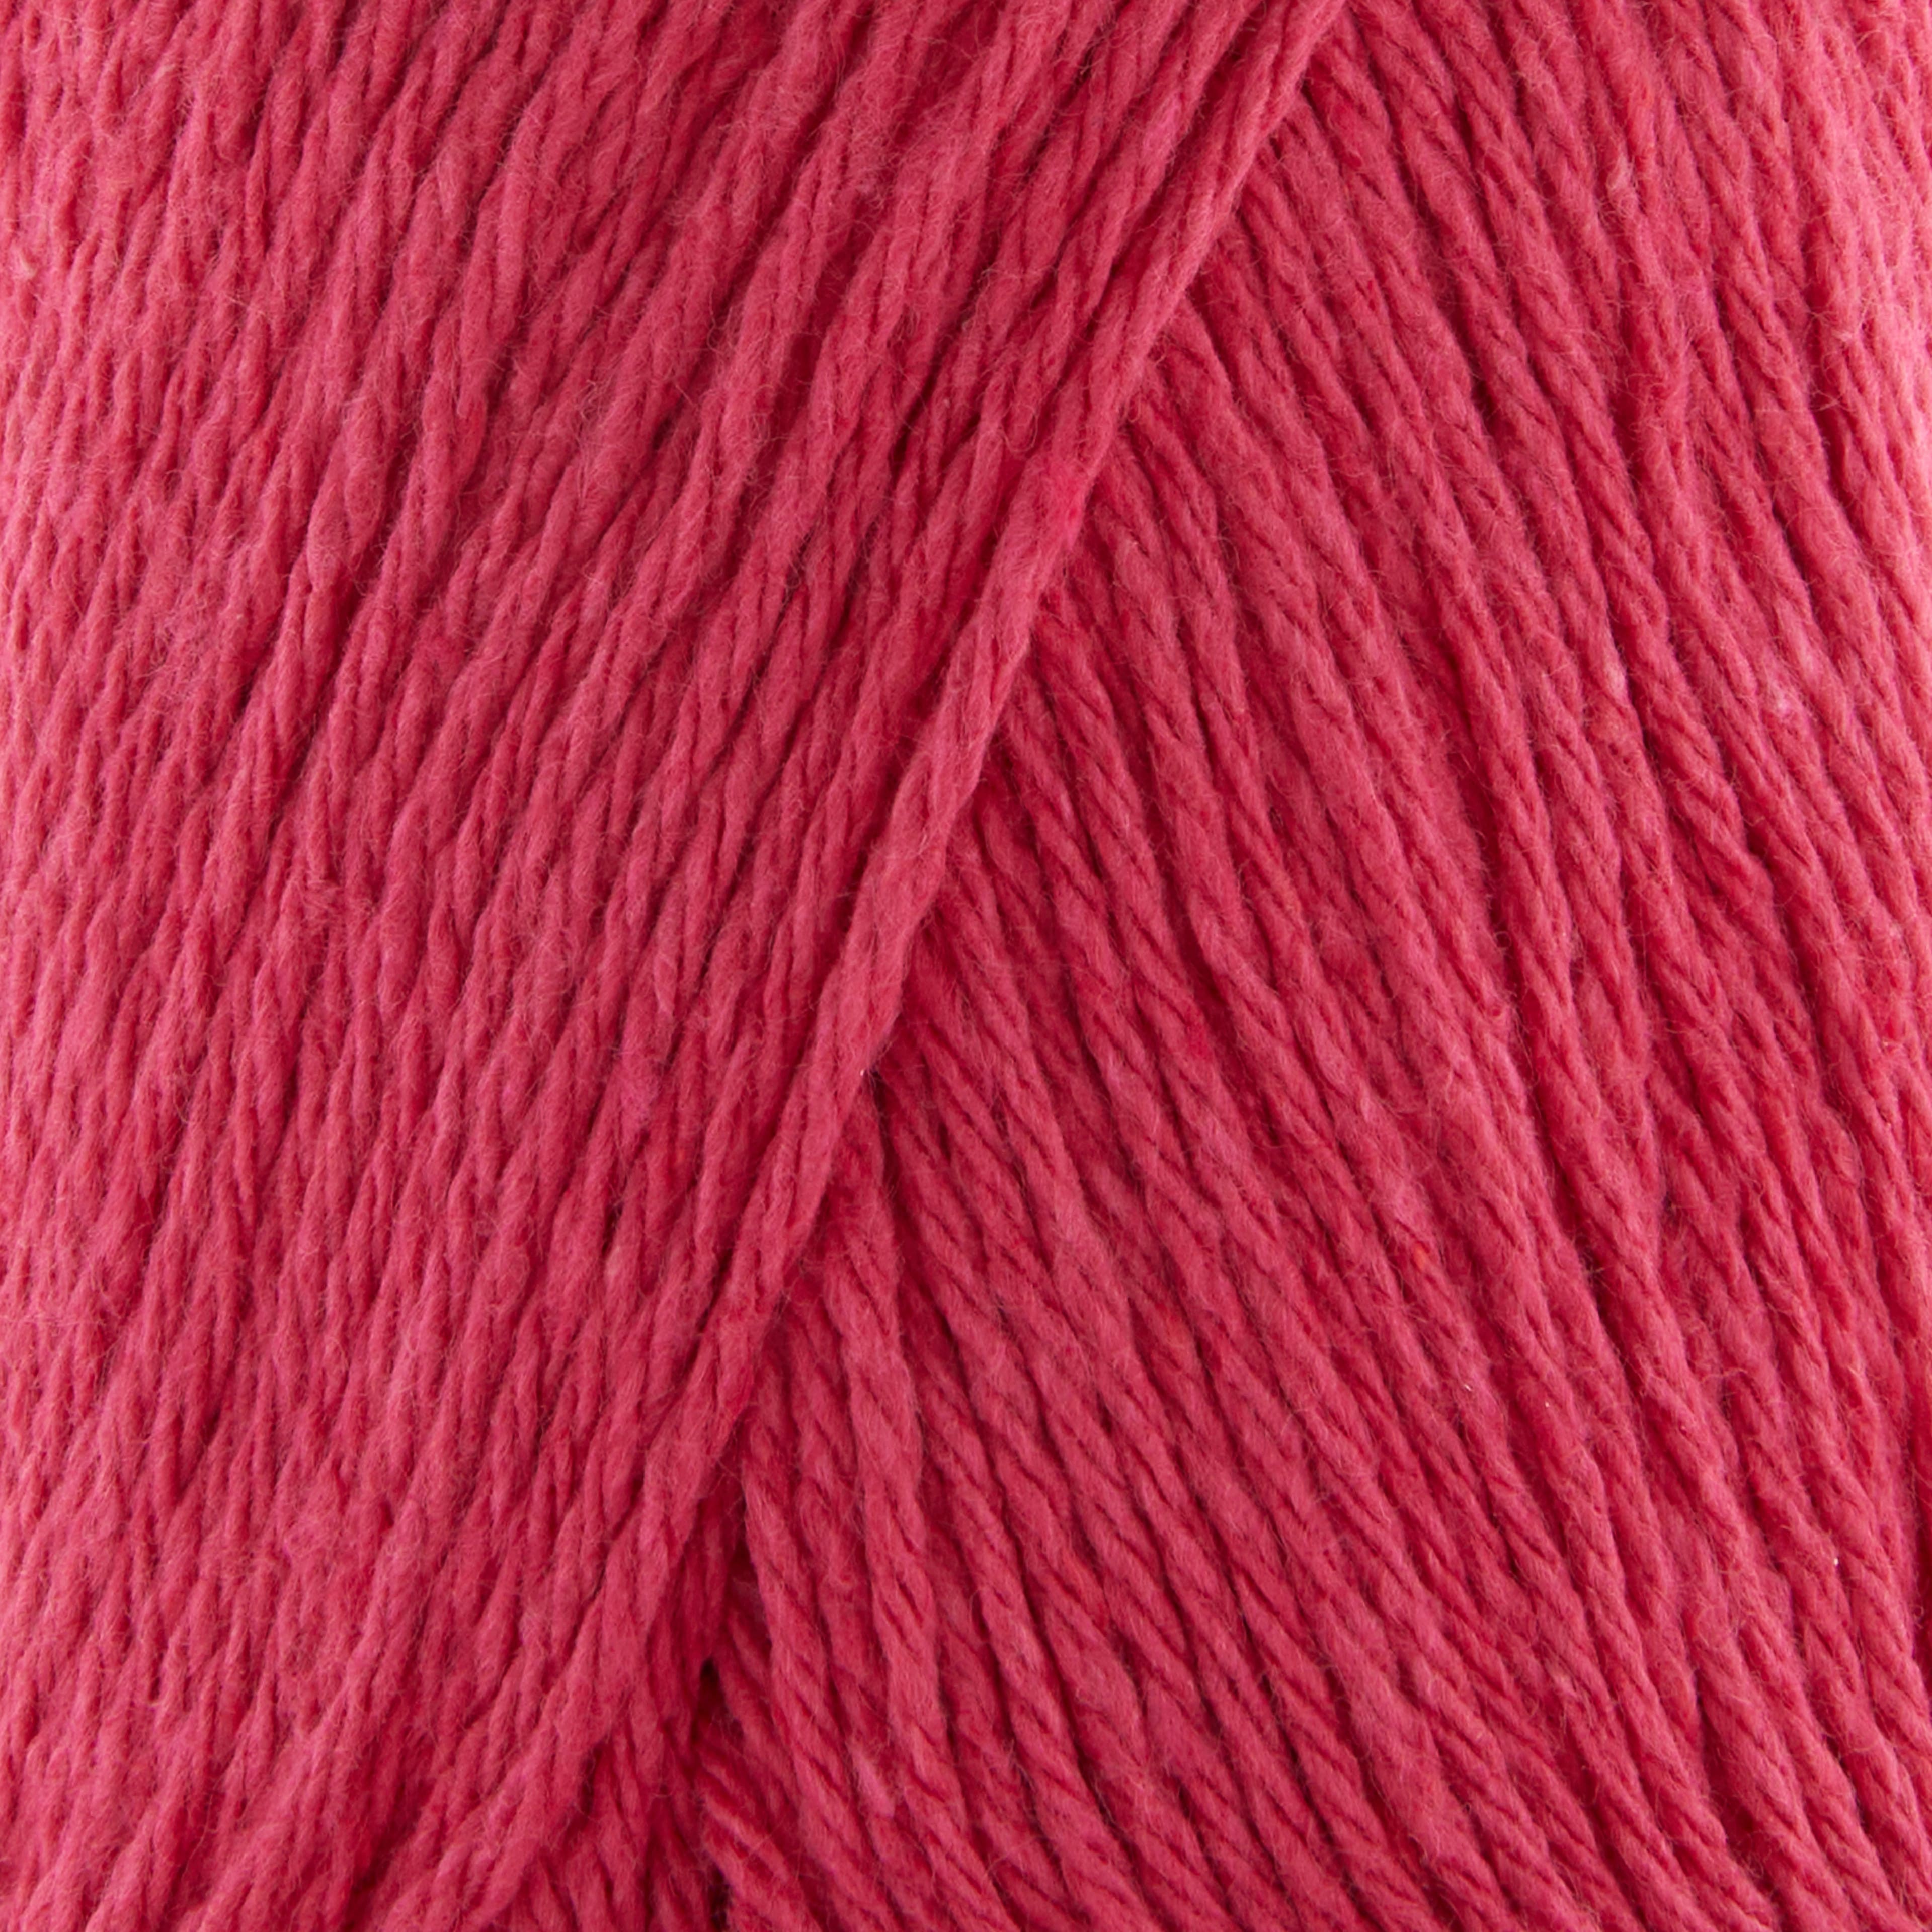 Capri Eco Cotton™ Multicolor Yarn by Loops & Threads®